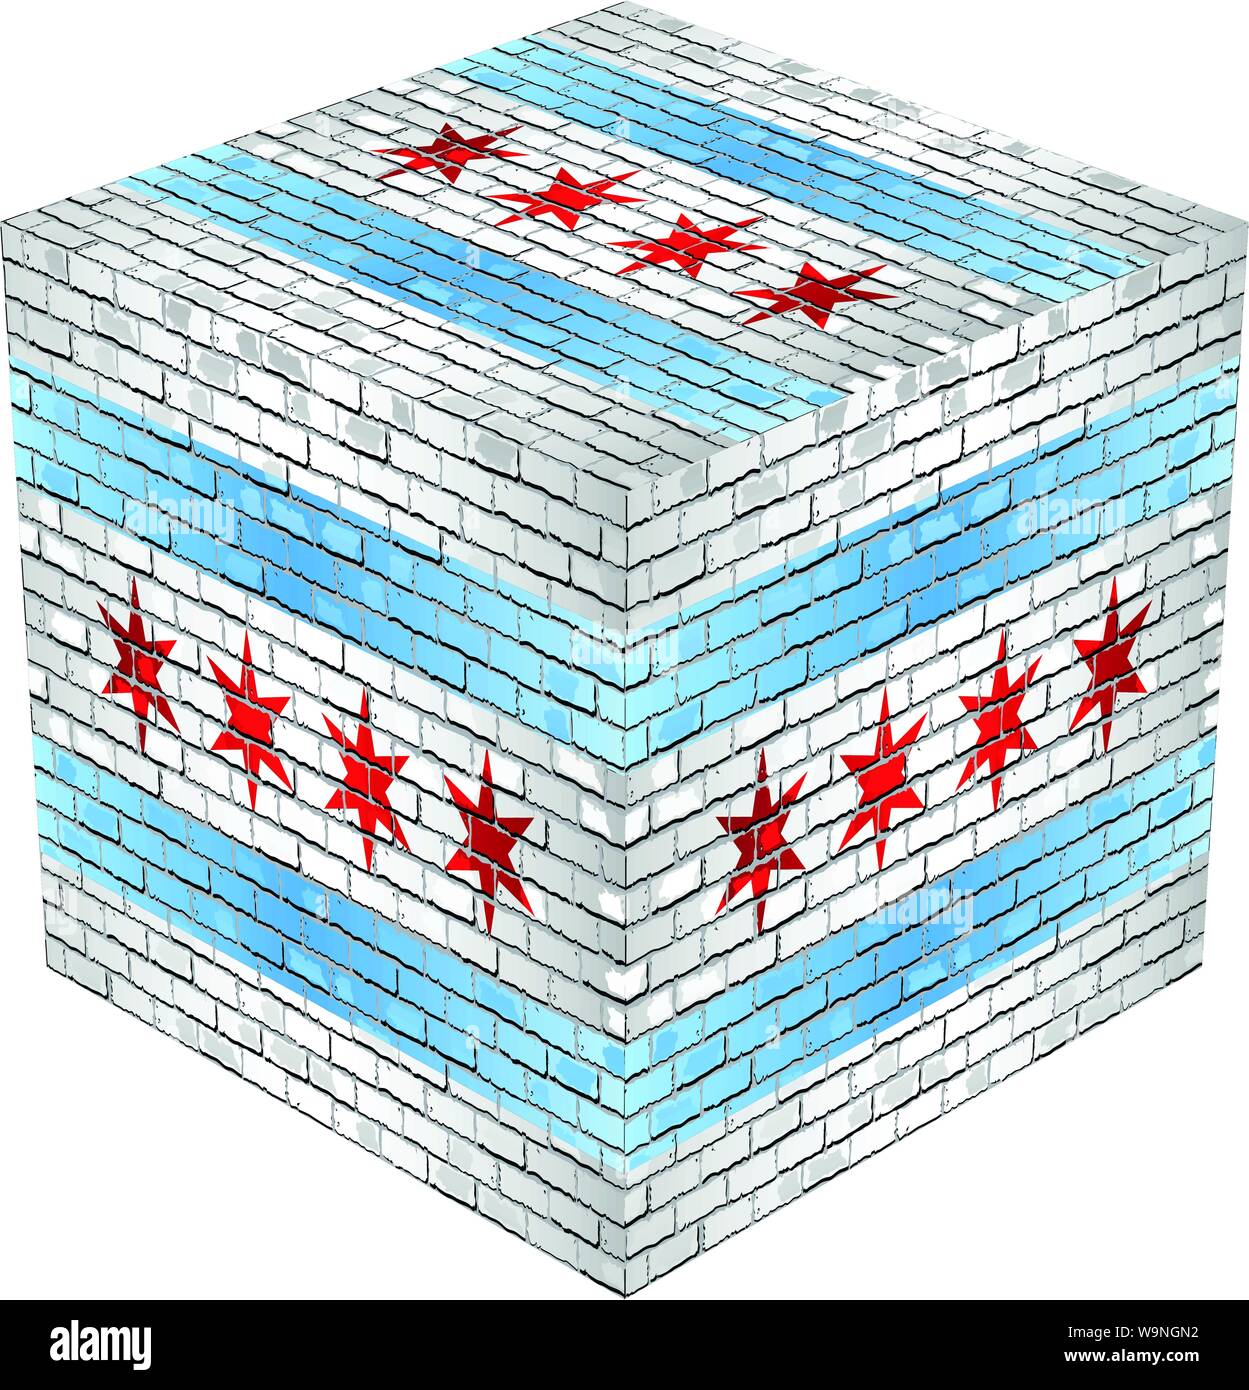 Chicago Cube in made of bricks - Illustration Stock Vector